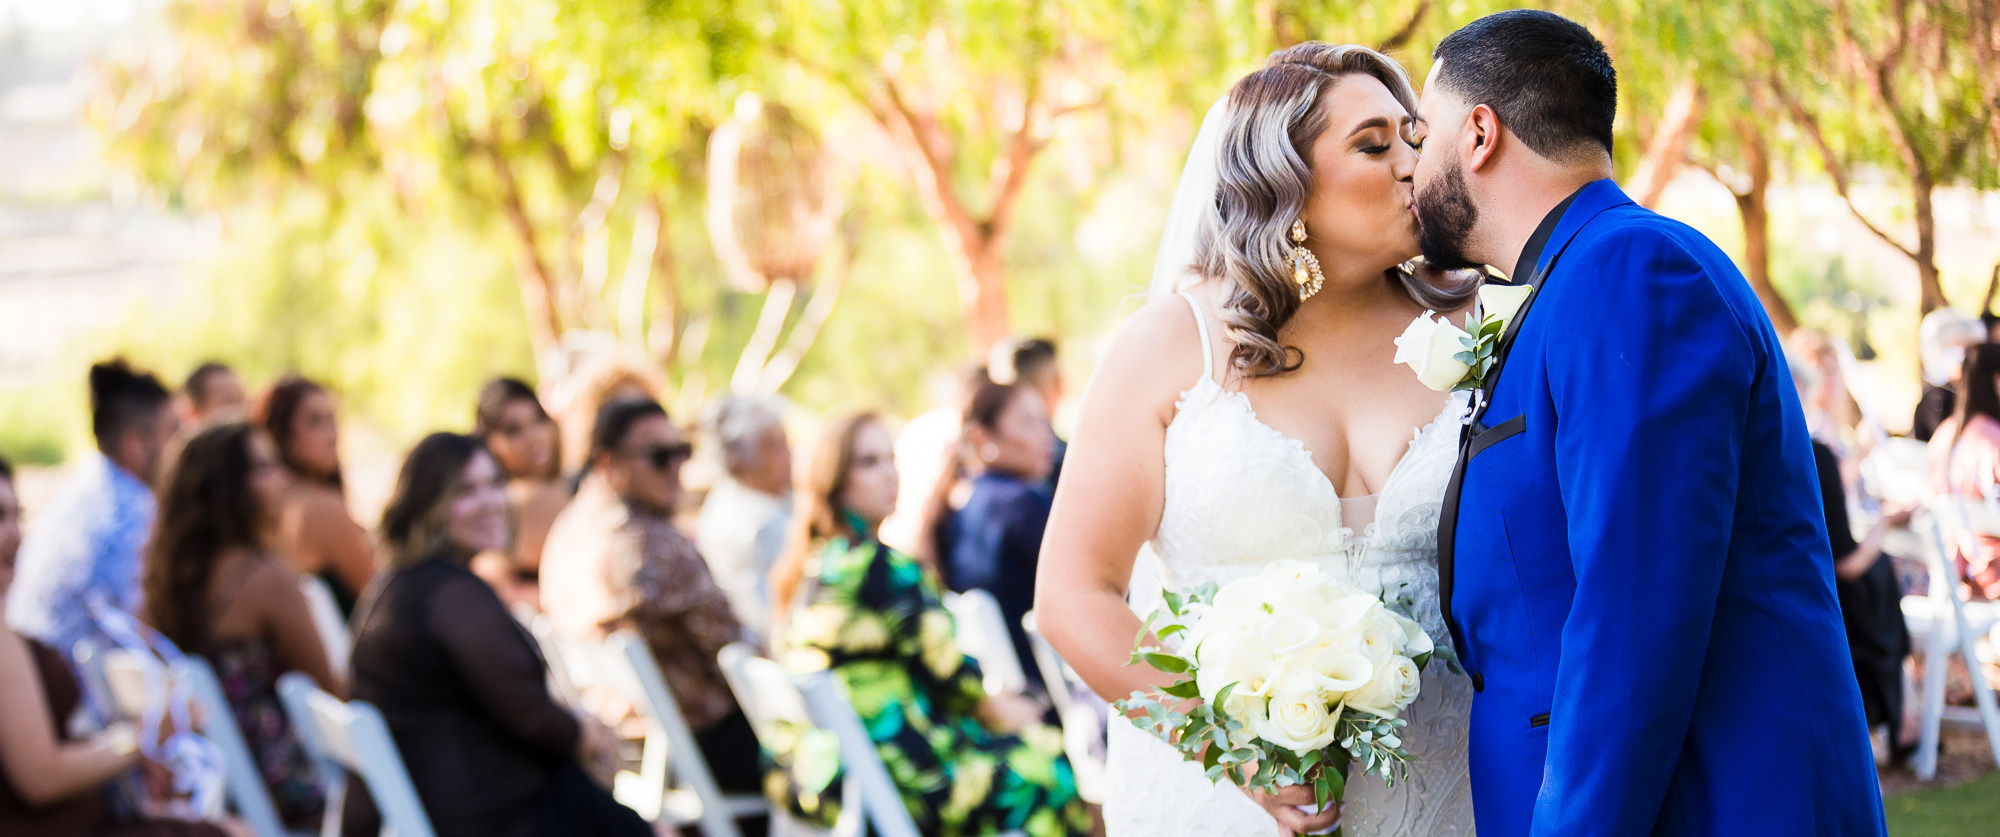 Best Wedding Photographer San Diego-12.png